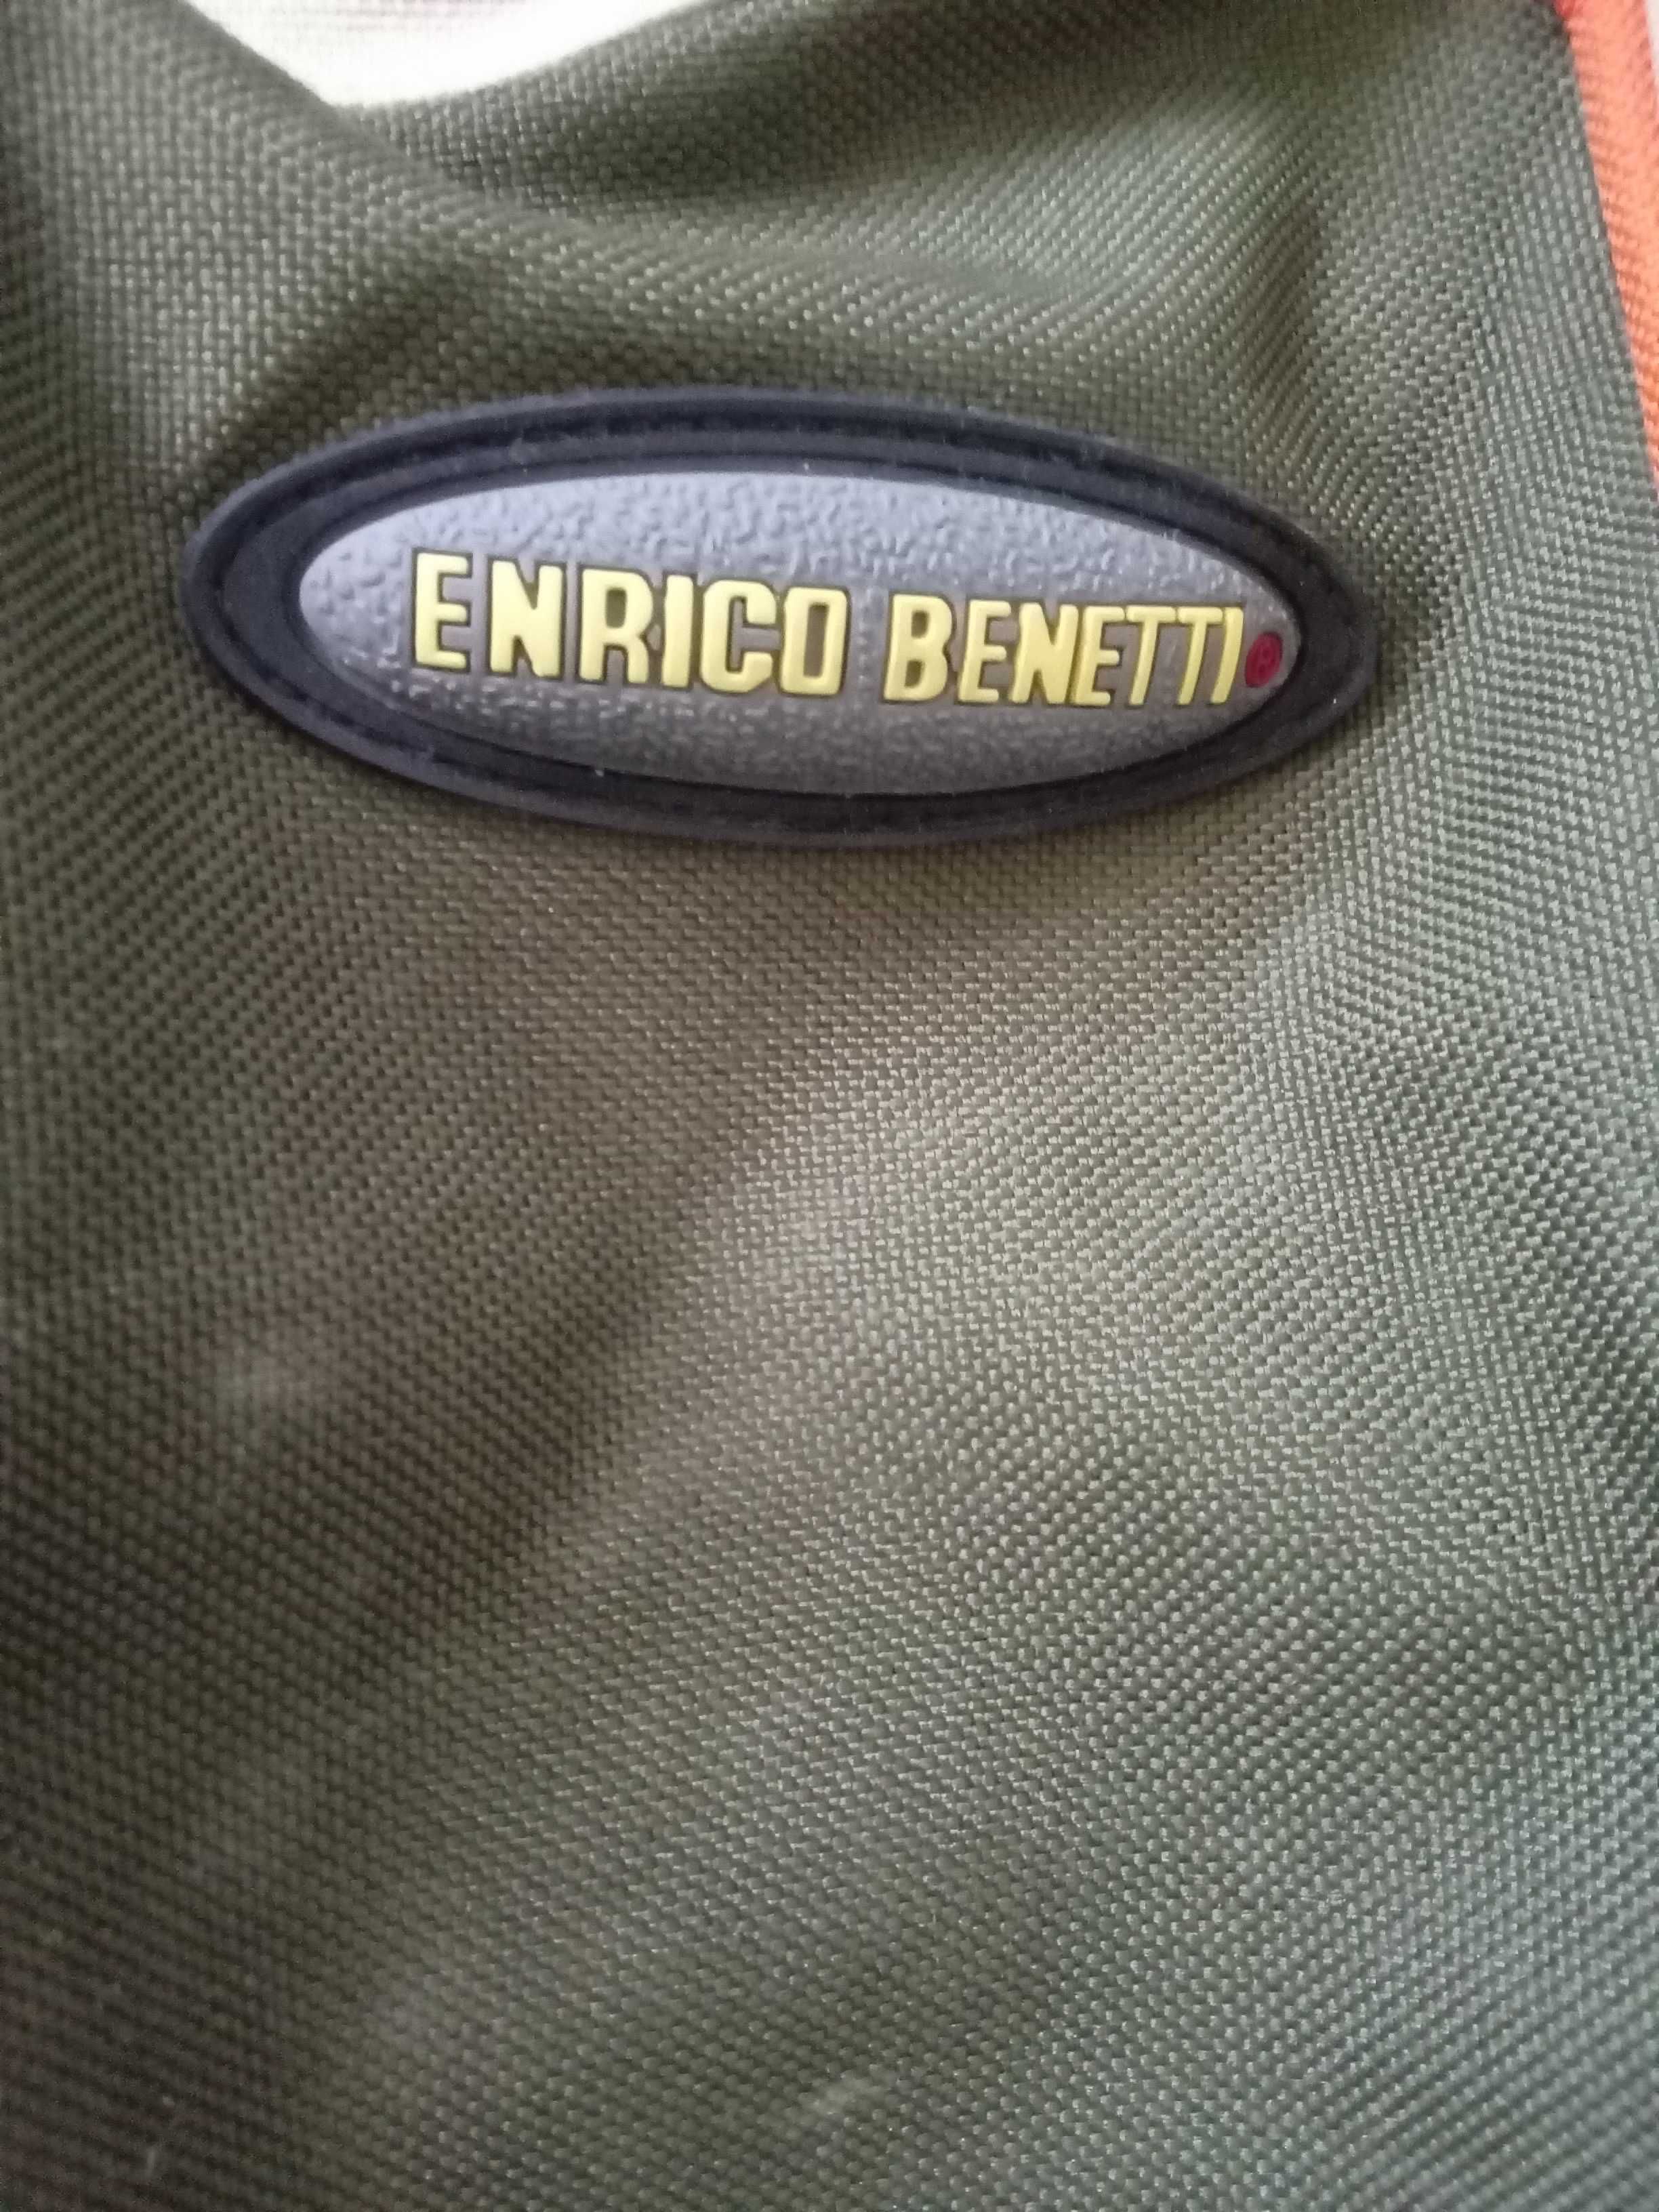 PLECAK szkolny Enrico BENETTI